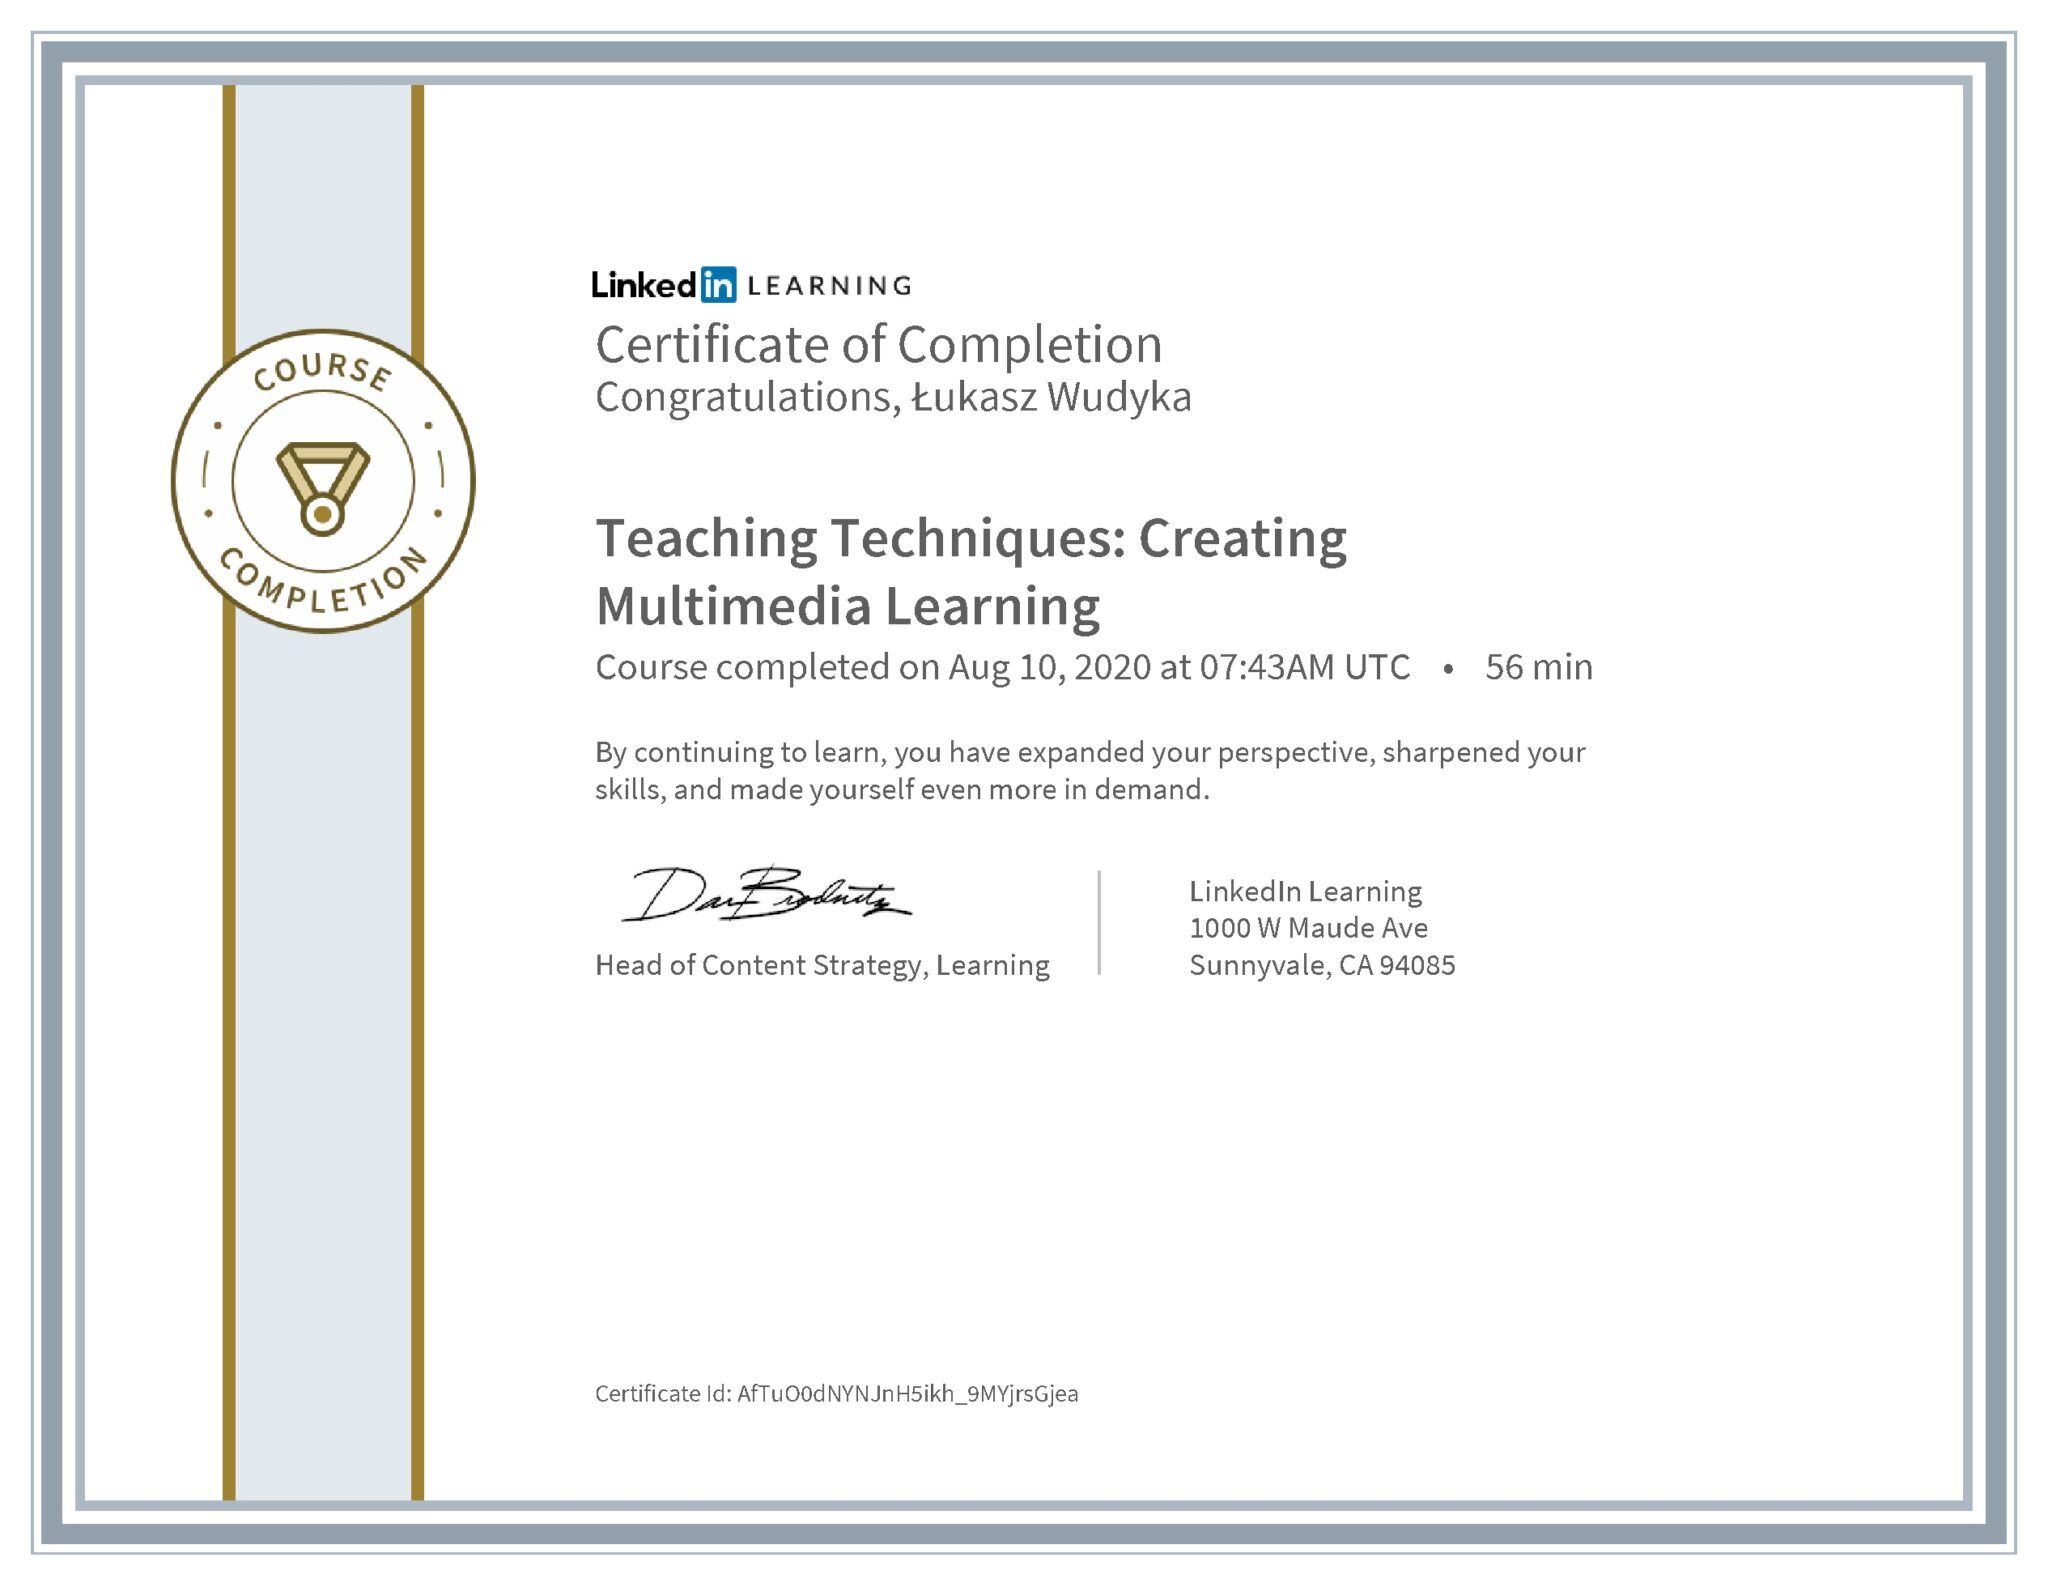 Łukasz Wudyka certyfikat LinkedIn Teaching Techniques: Creating Multimedia Learning